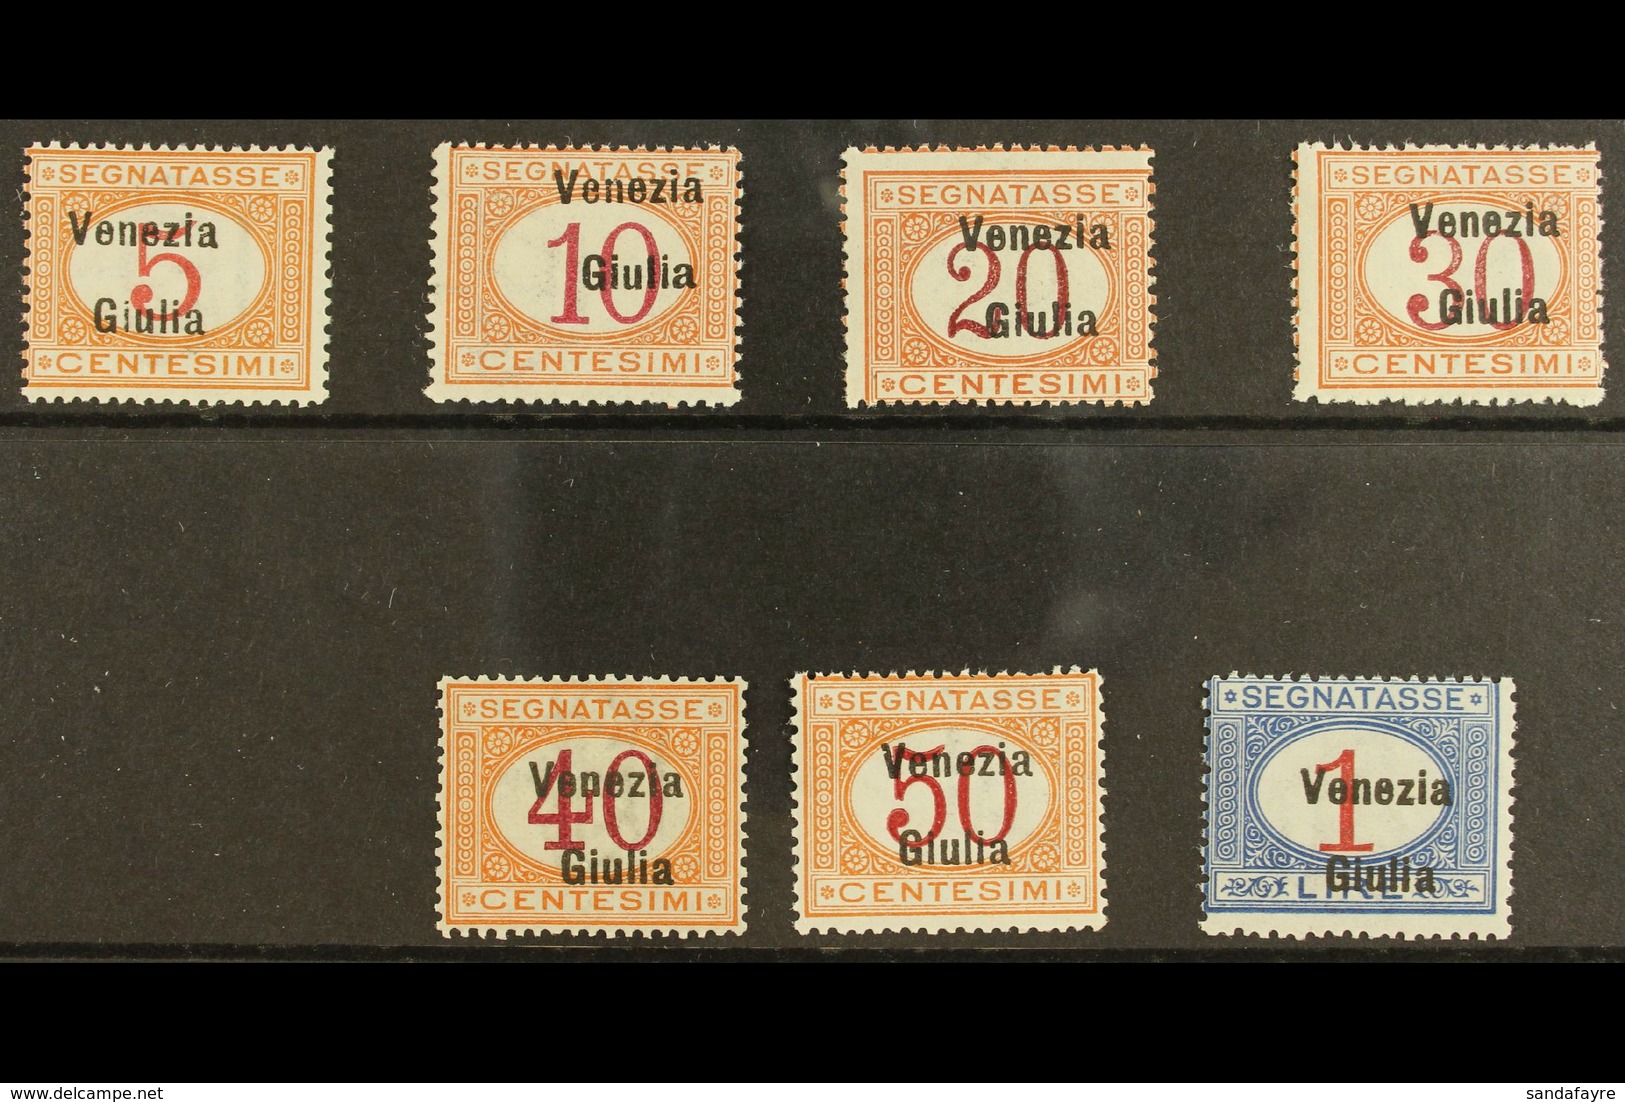 VENEZIA GIULIA POSTAGE DUES 1918 Overprint Set Complete, Sass S4, Very Fine Never Hinged Mint. Cat €2500 (£1900) Rare Se - Ohne Zuordnung